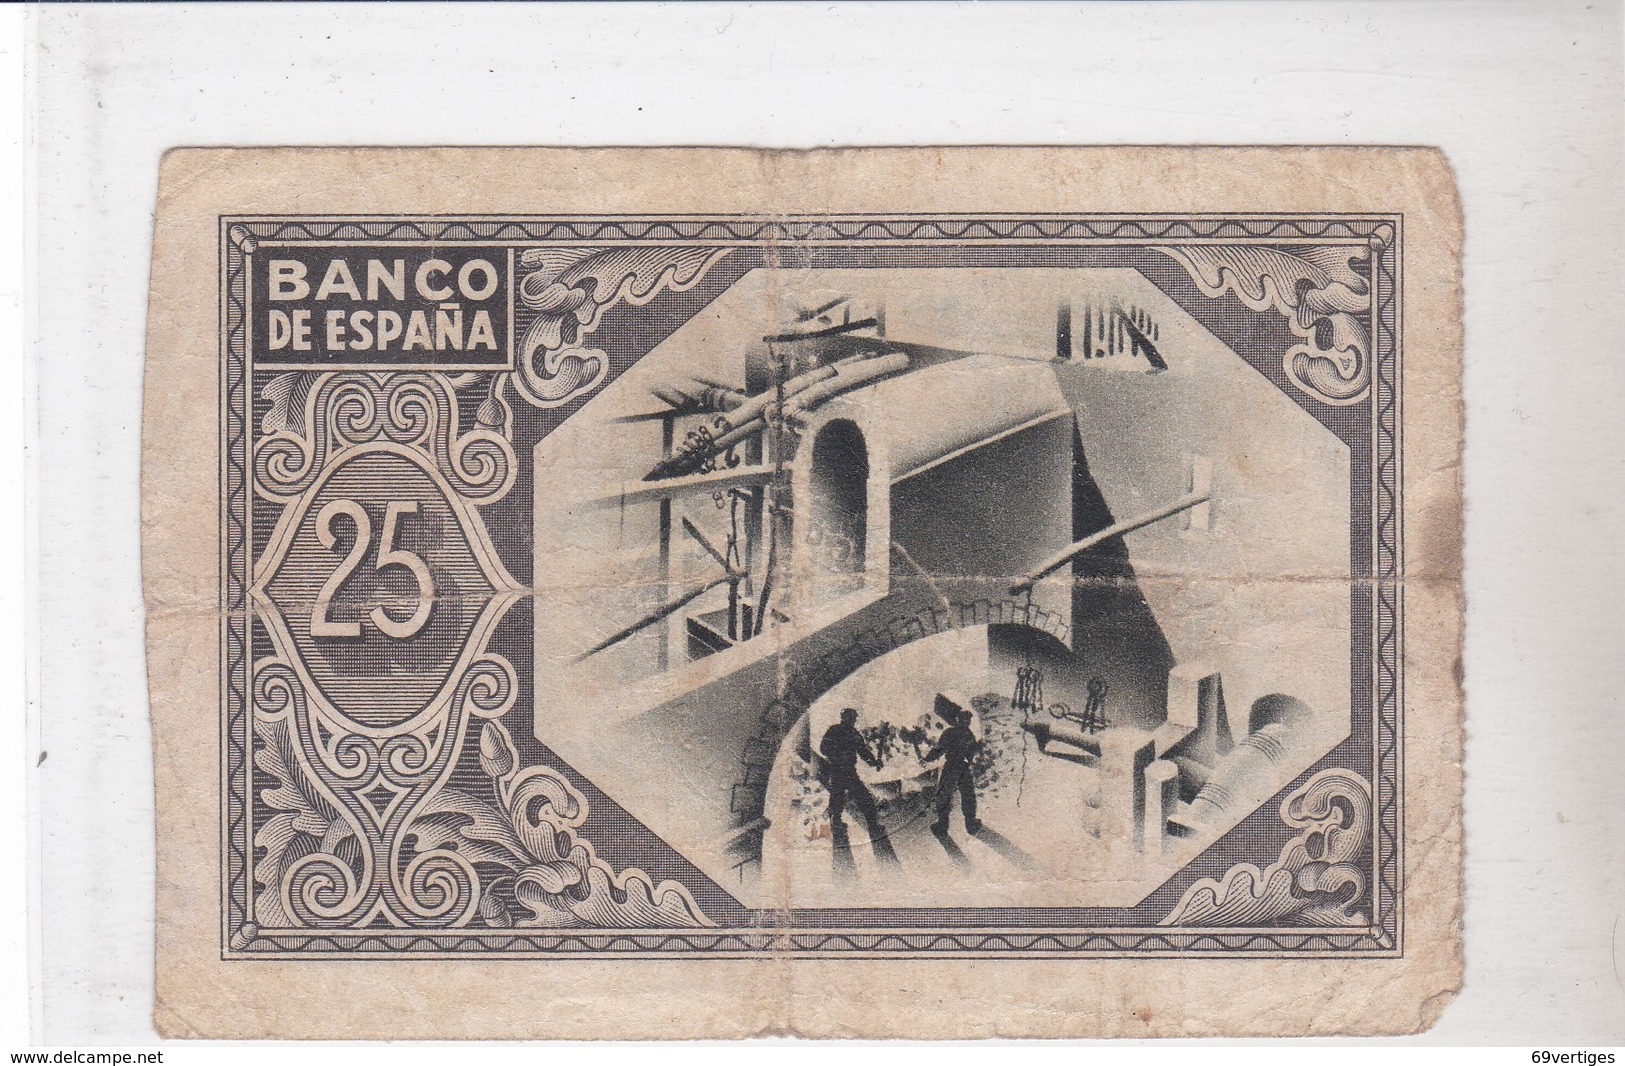 EL BANCO DE ESPANA, BILBAO, Veinticinco Pesetas, émission 1 Enero 1937 - 25 Pesetas